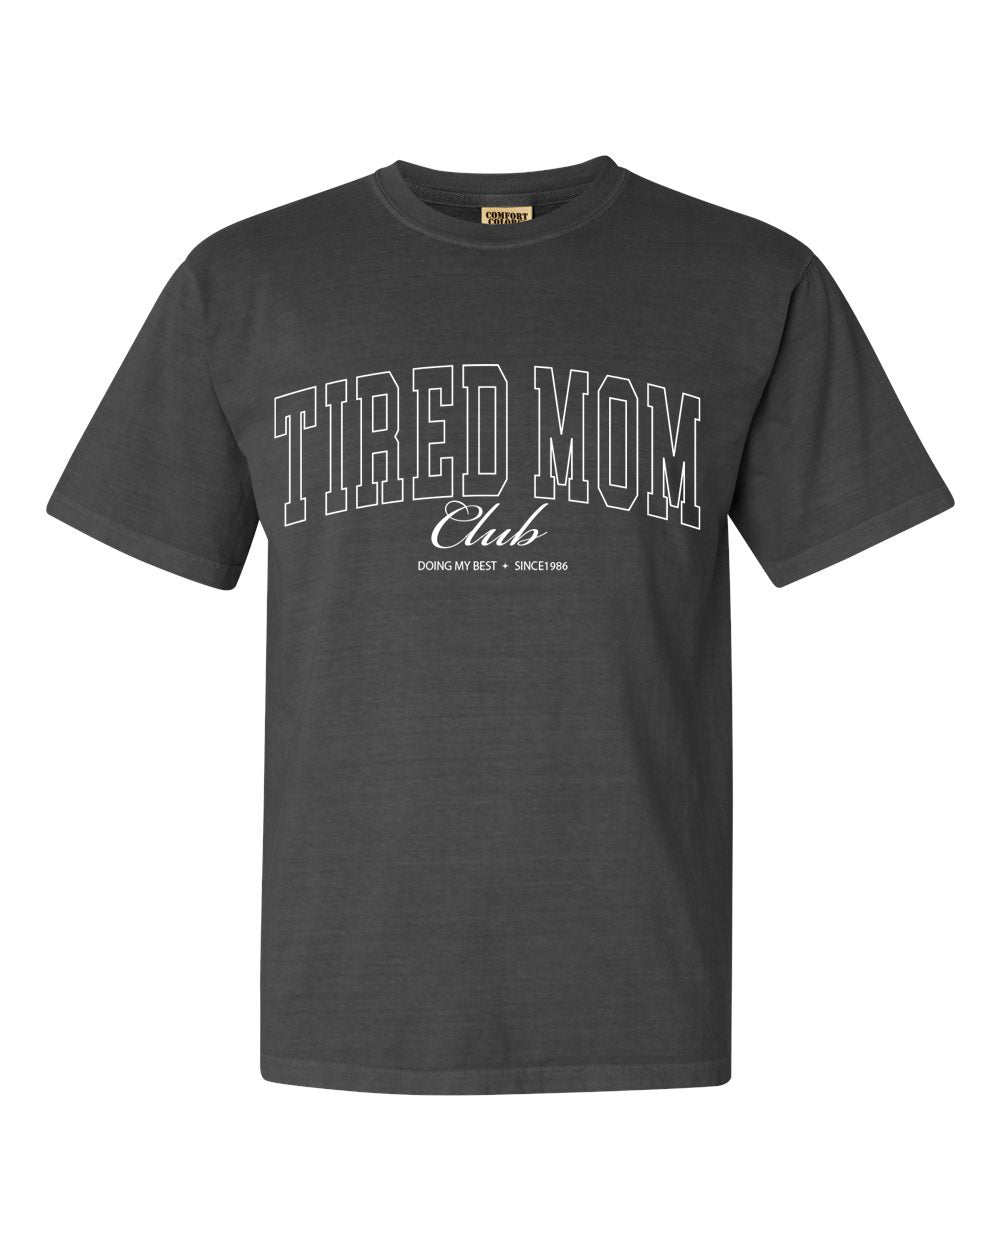 Tired Mom Club Varsity T-shirt